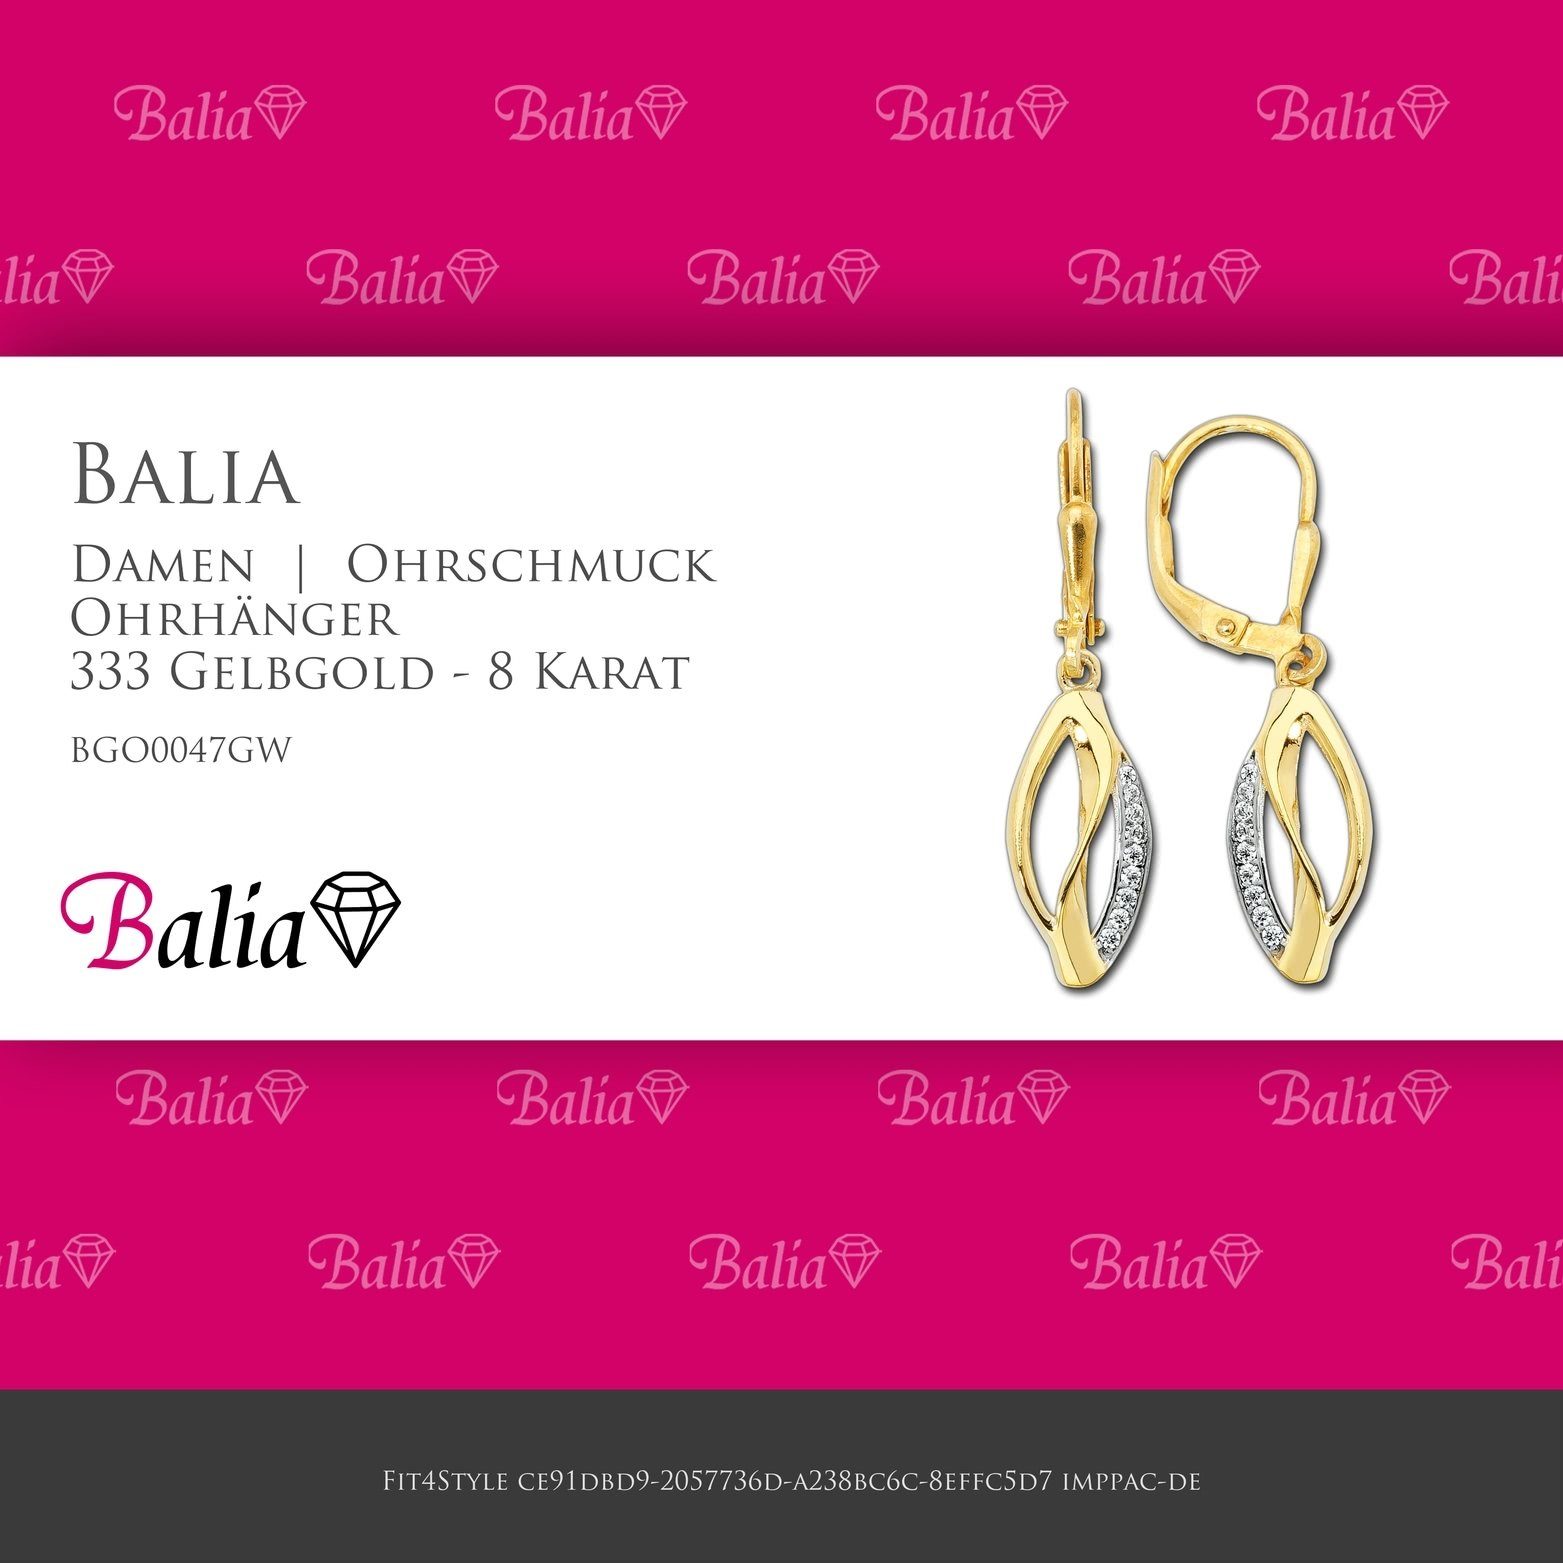 Blatt Karat, Paar 8 Gold Creolen 3,2cm Damen Gelbgold 333 Ohrhänger - Damen für Ohrhänger (Ohrhänger), ca. aus Balia Länge Balia Blatt